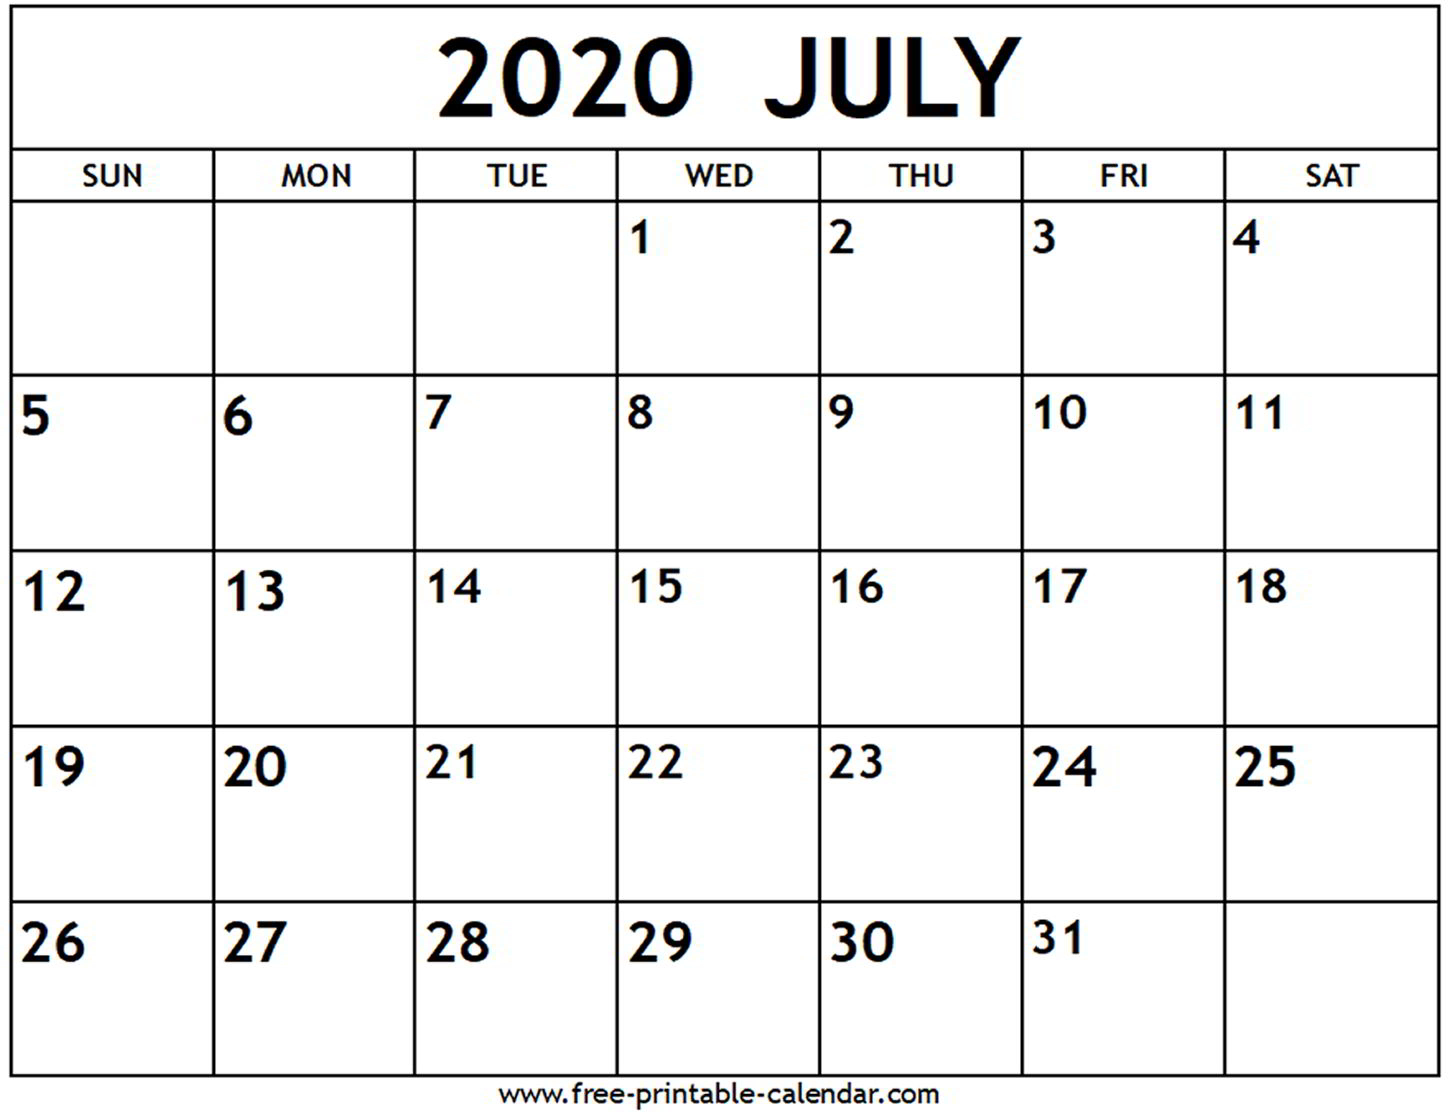 July 2020 Calendar - Free-Printable-Calendar